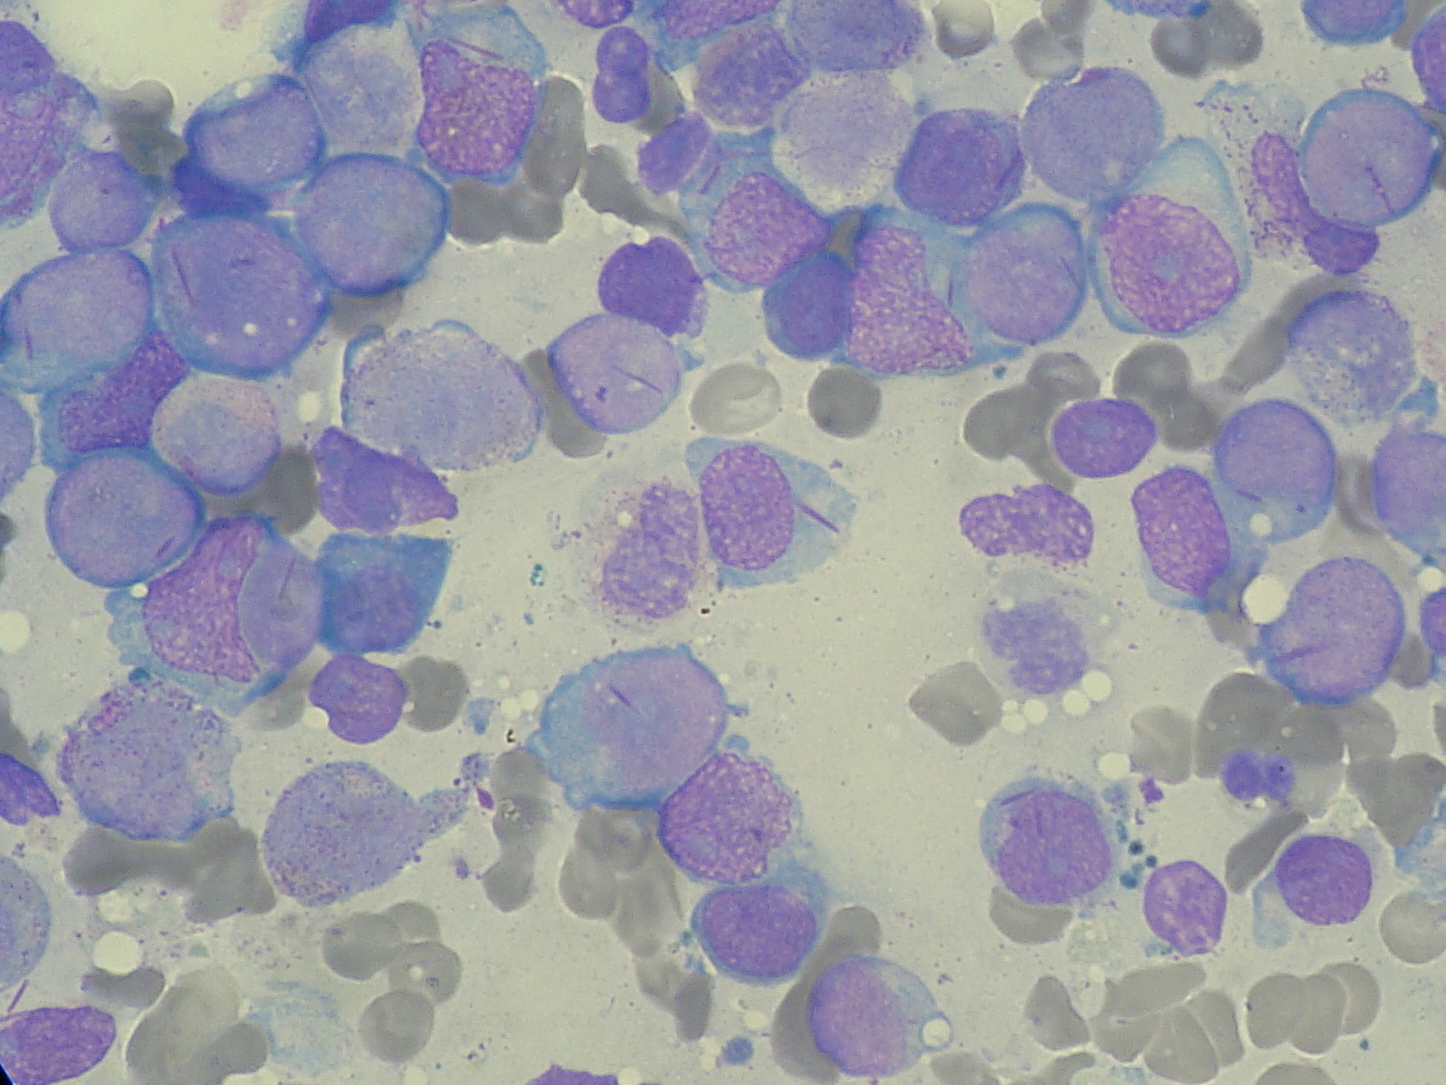 Myeloblasts with Auer rods seen in acute myeloid leukemia